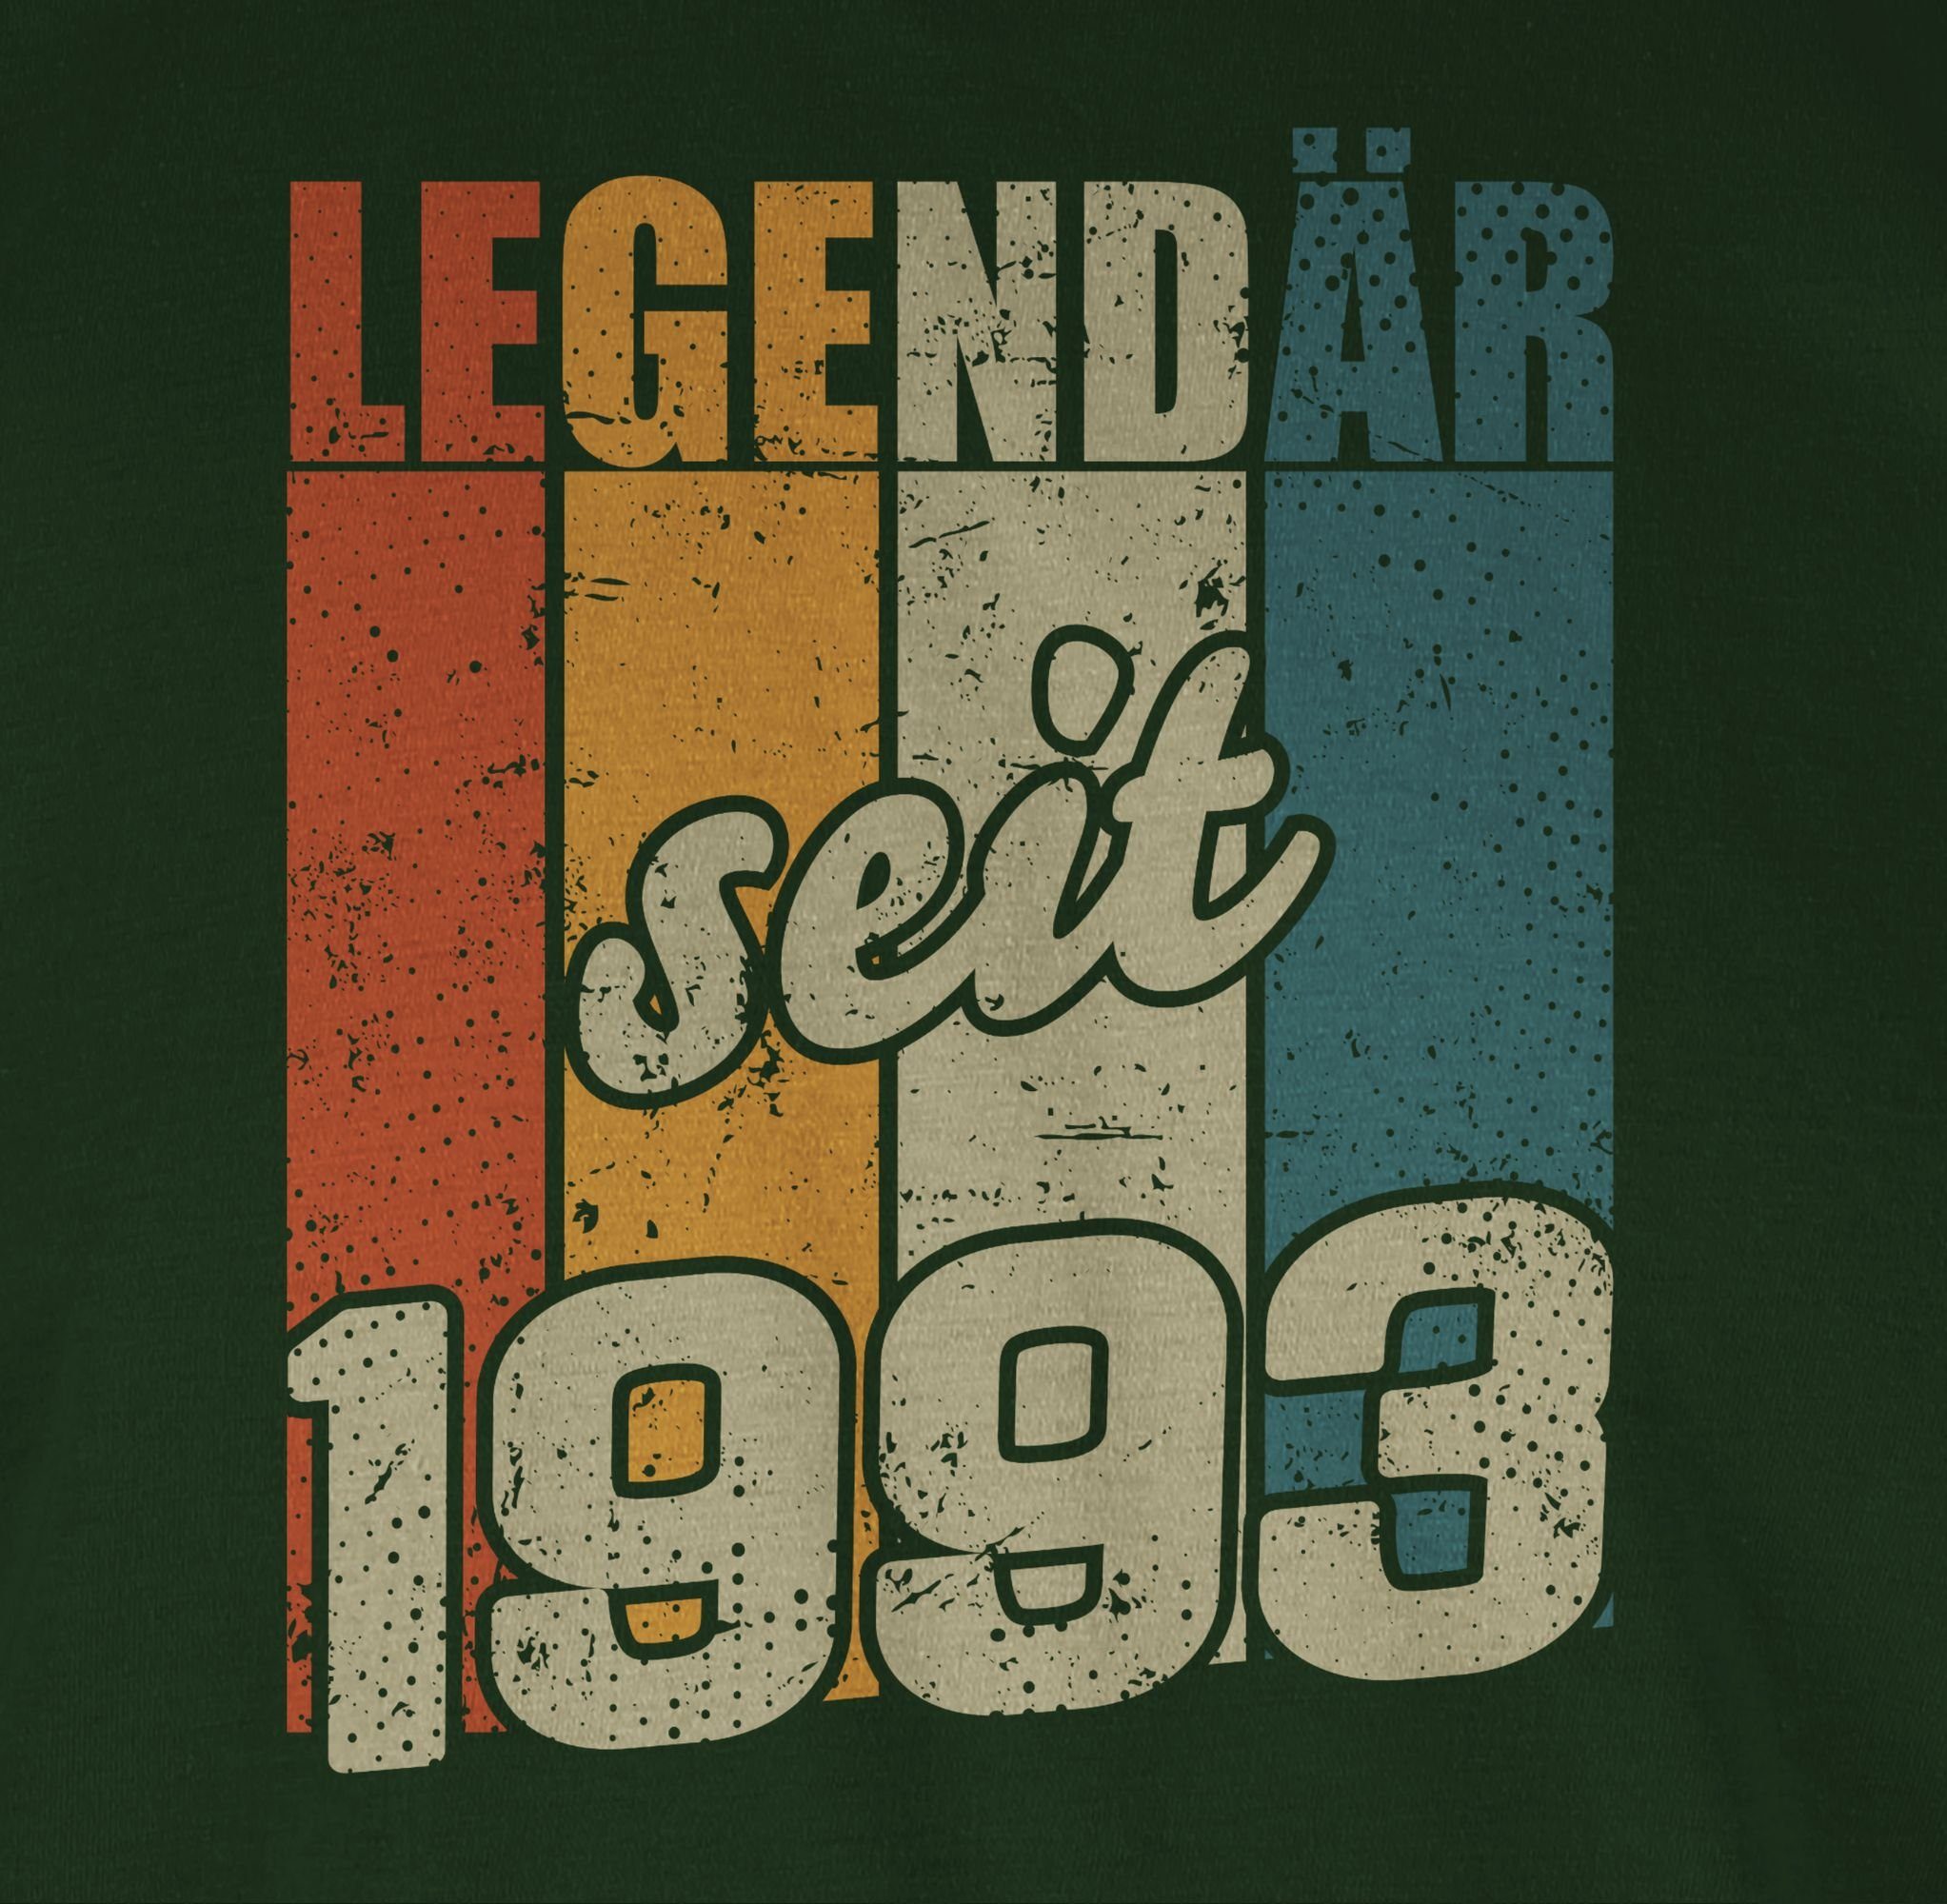 02 Geburtstag 30. 1993 T-Shirt Dunkelgrün seit Legendär Shirtracer